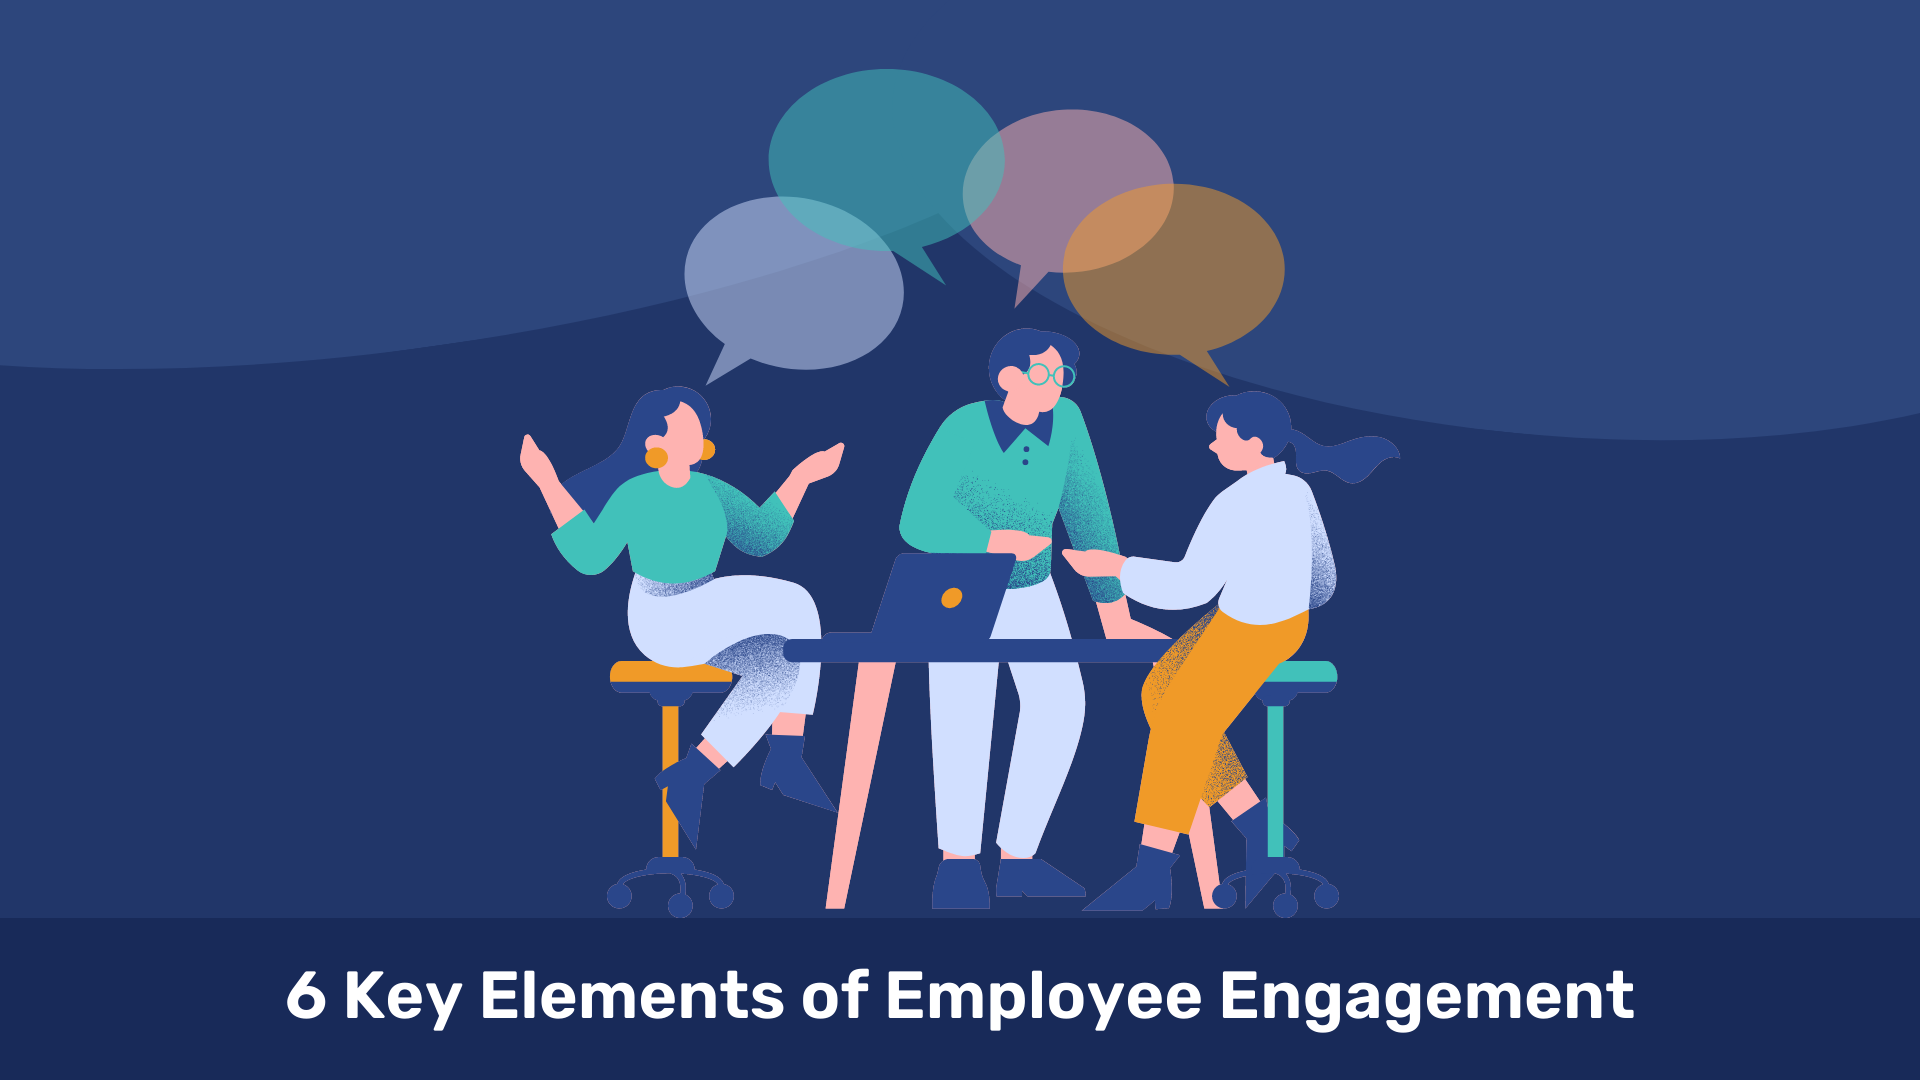 The 6 Key Elements of Employee Engagement